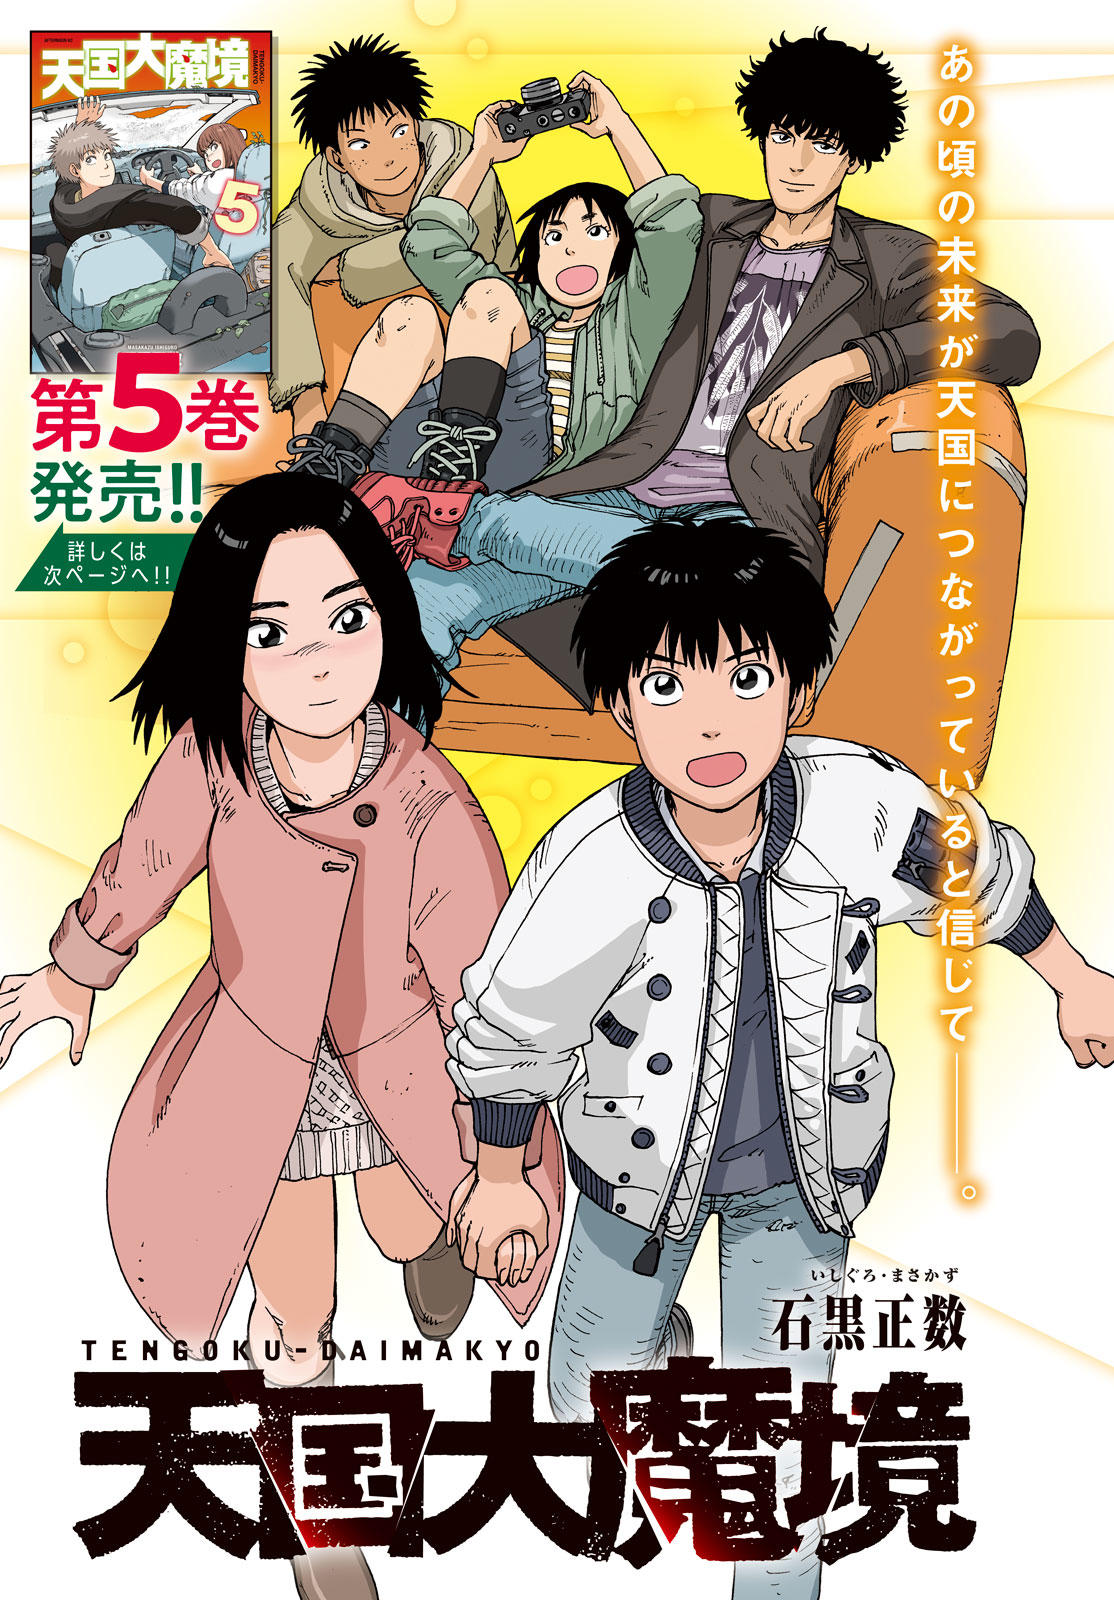 Read Tengoku Daimakyou Chapter 32: Inazaki Robin - Manganelo